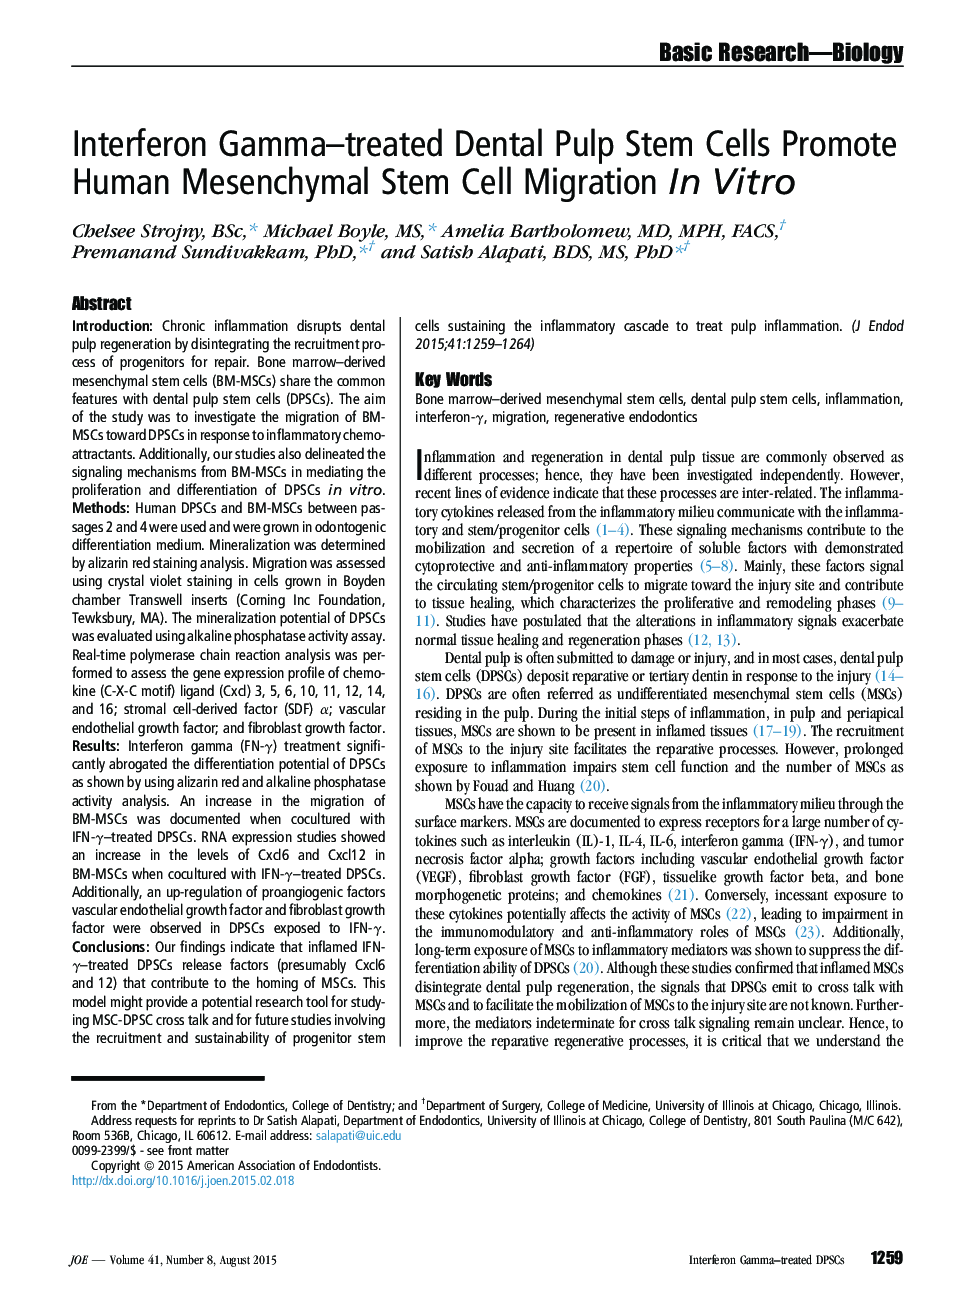 Interferon Gamma–treated Dental Pulp Stem Cells Promote Human Mesenchymal Stem Cell Migration In Vitro